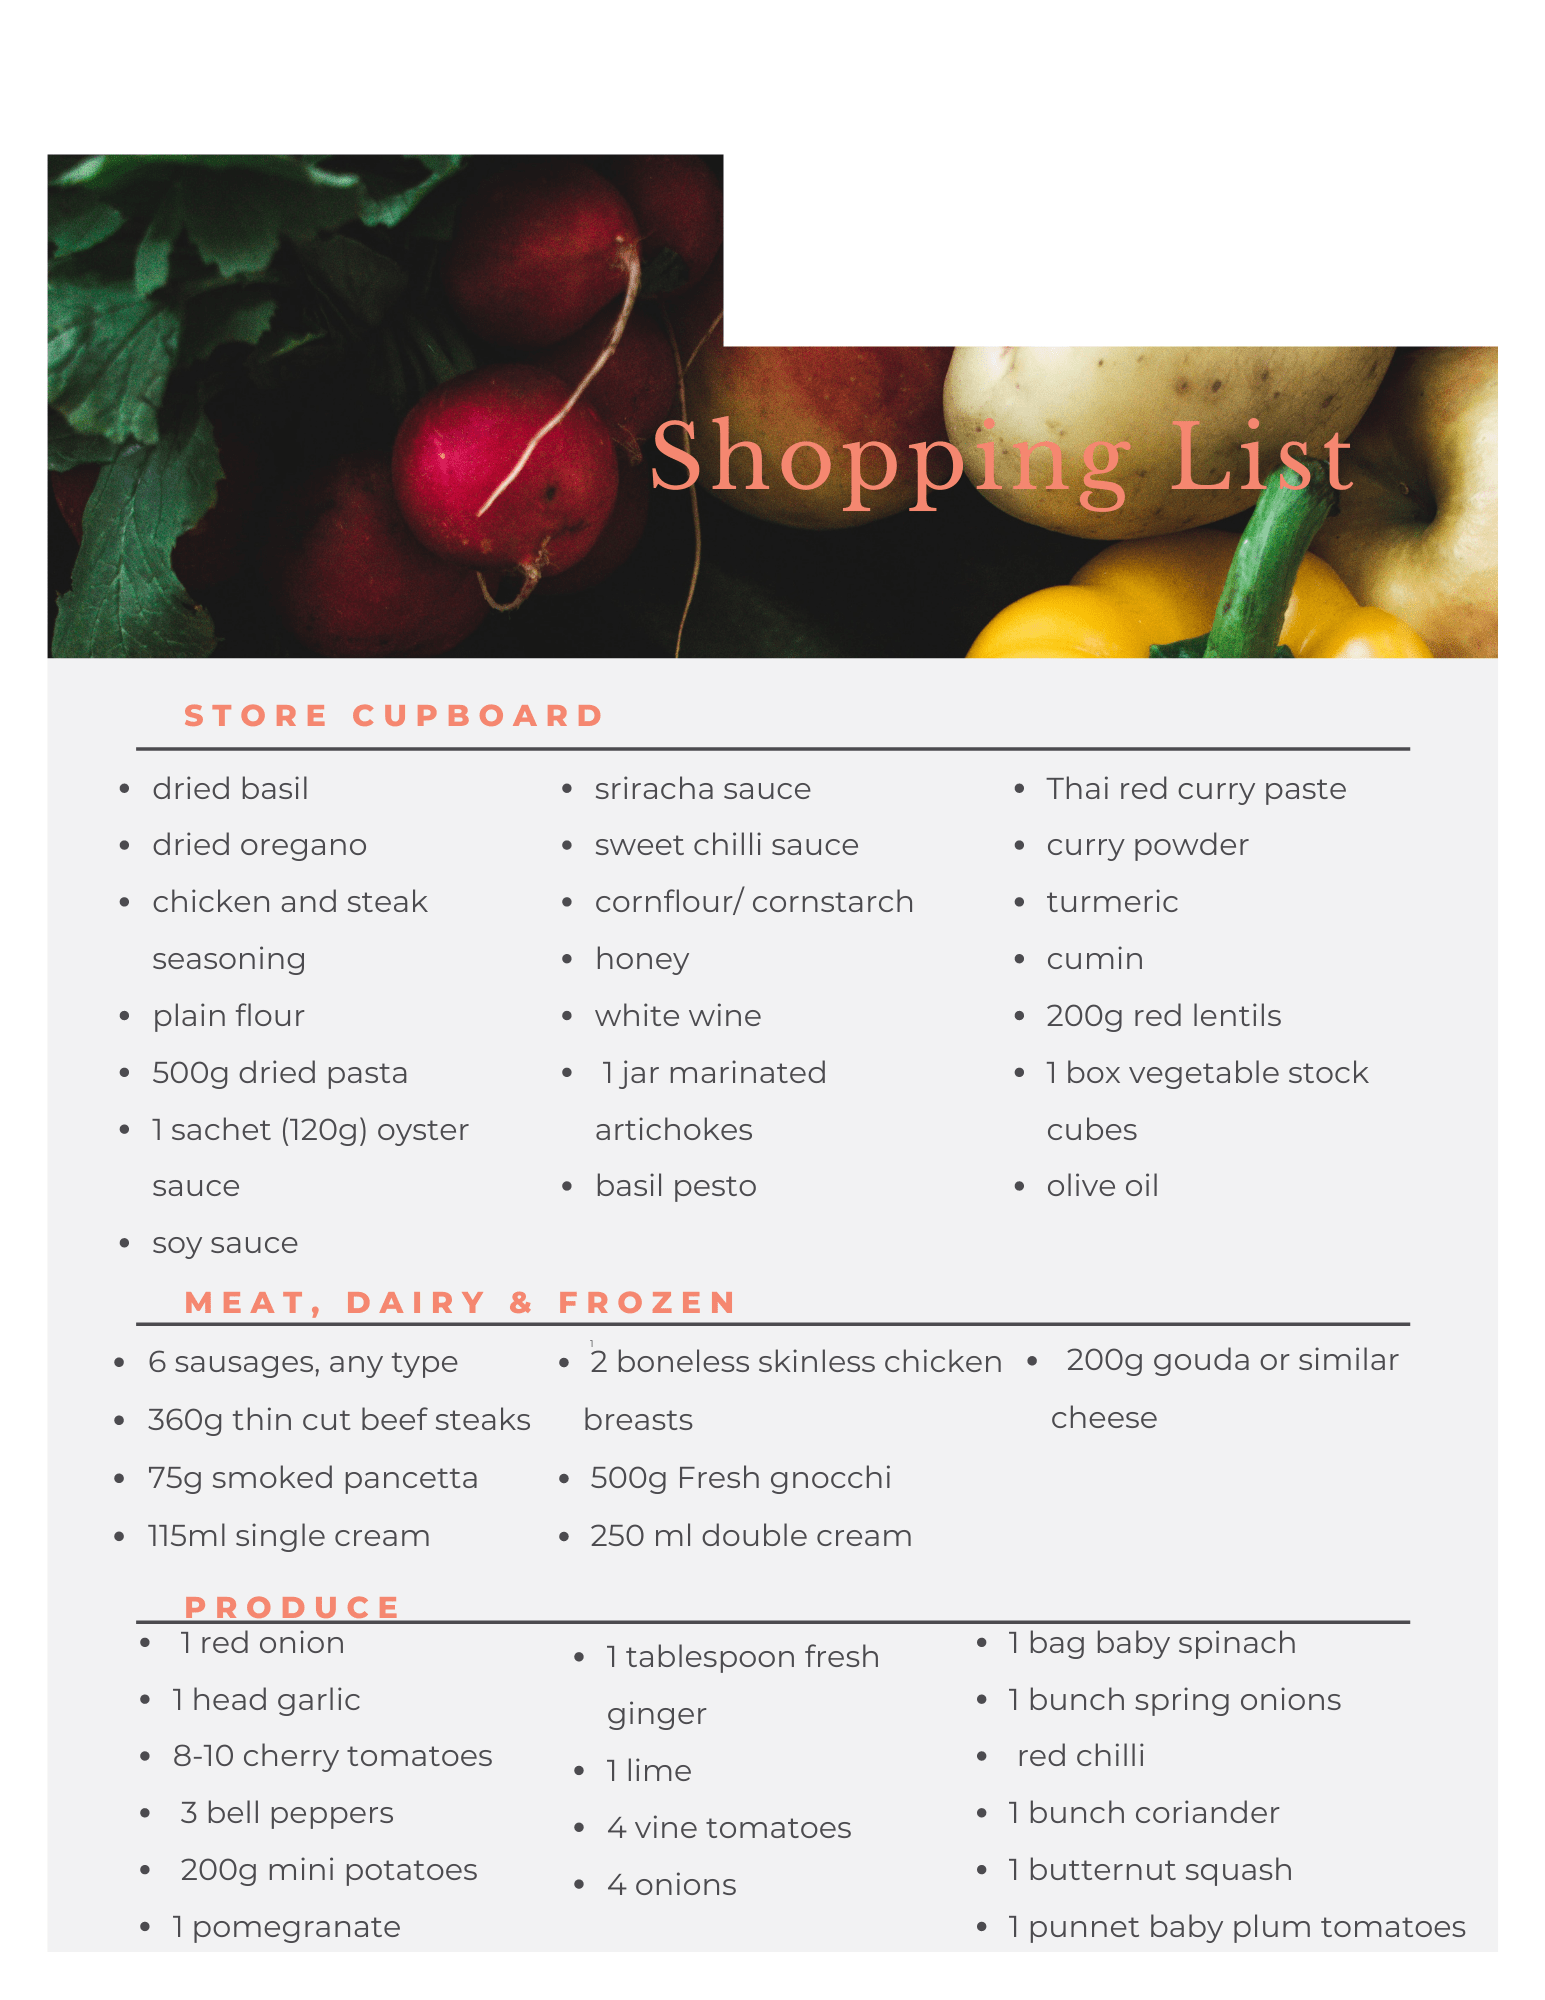 Aldi budget meal plan shopping list. Free prinatable.